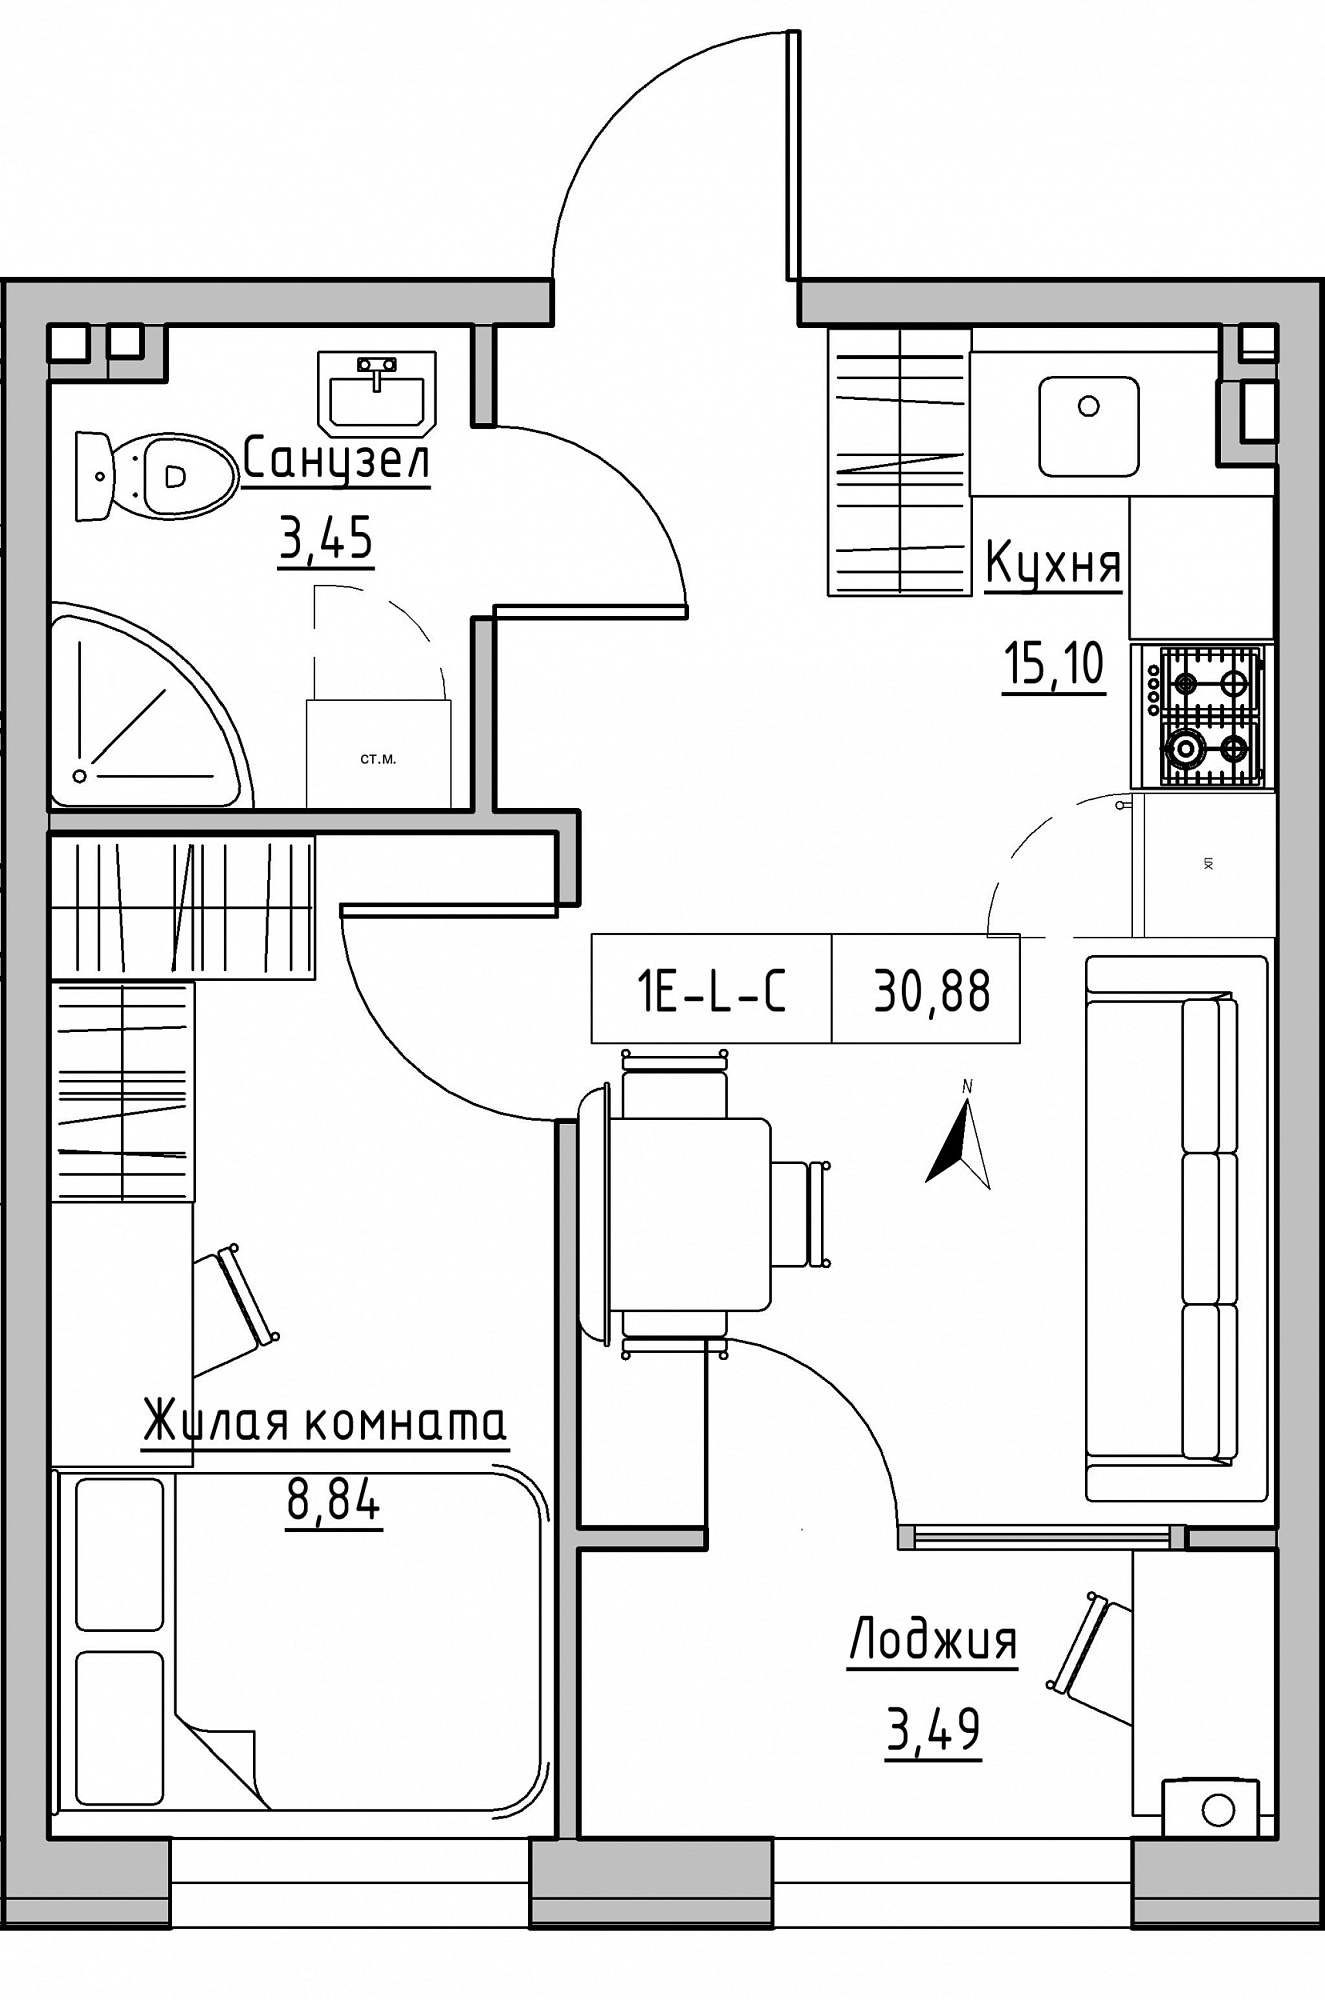 Planning 1-rm flats area 30.88m2, KS-024-02/0007.